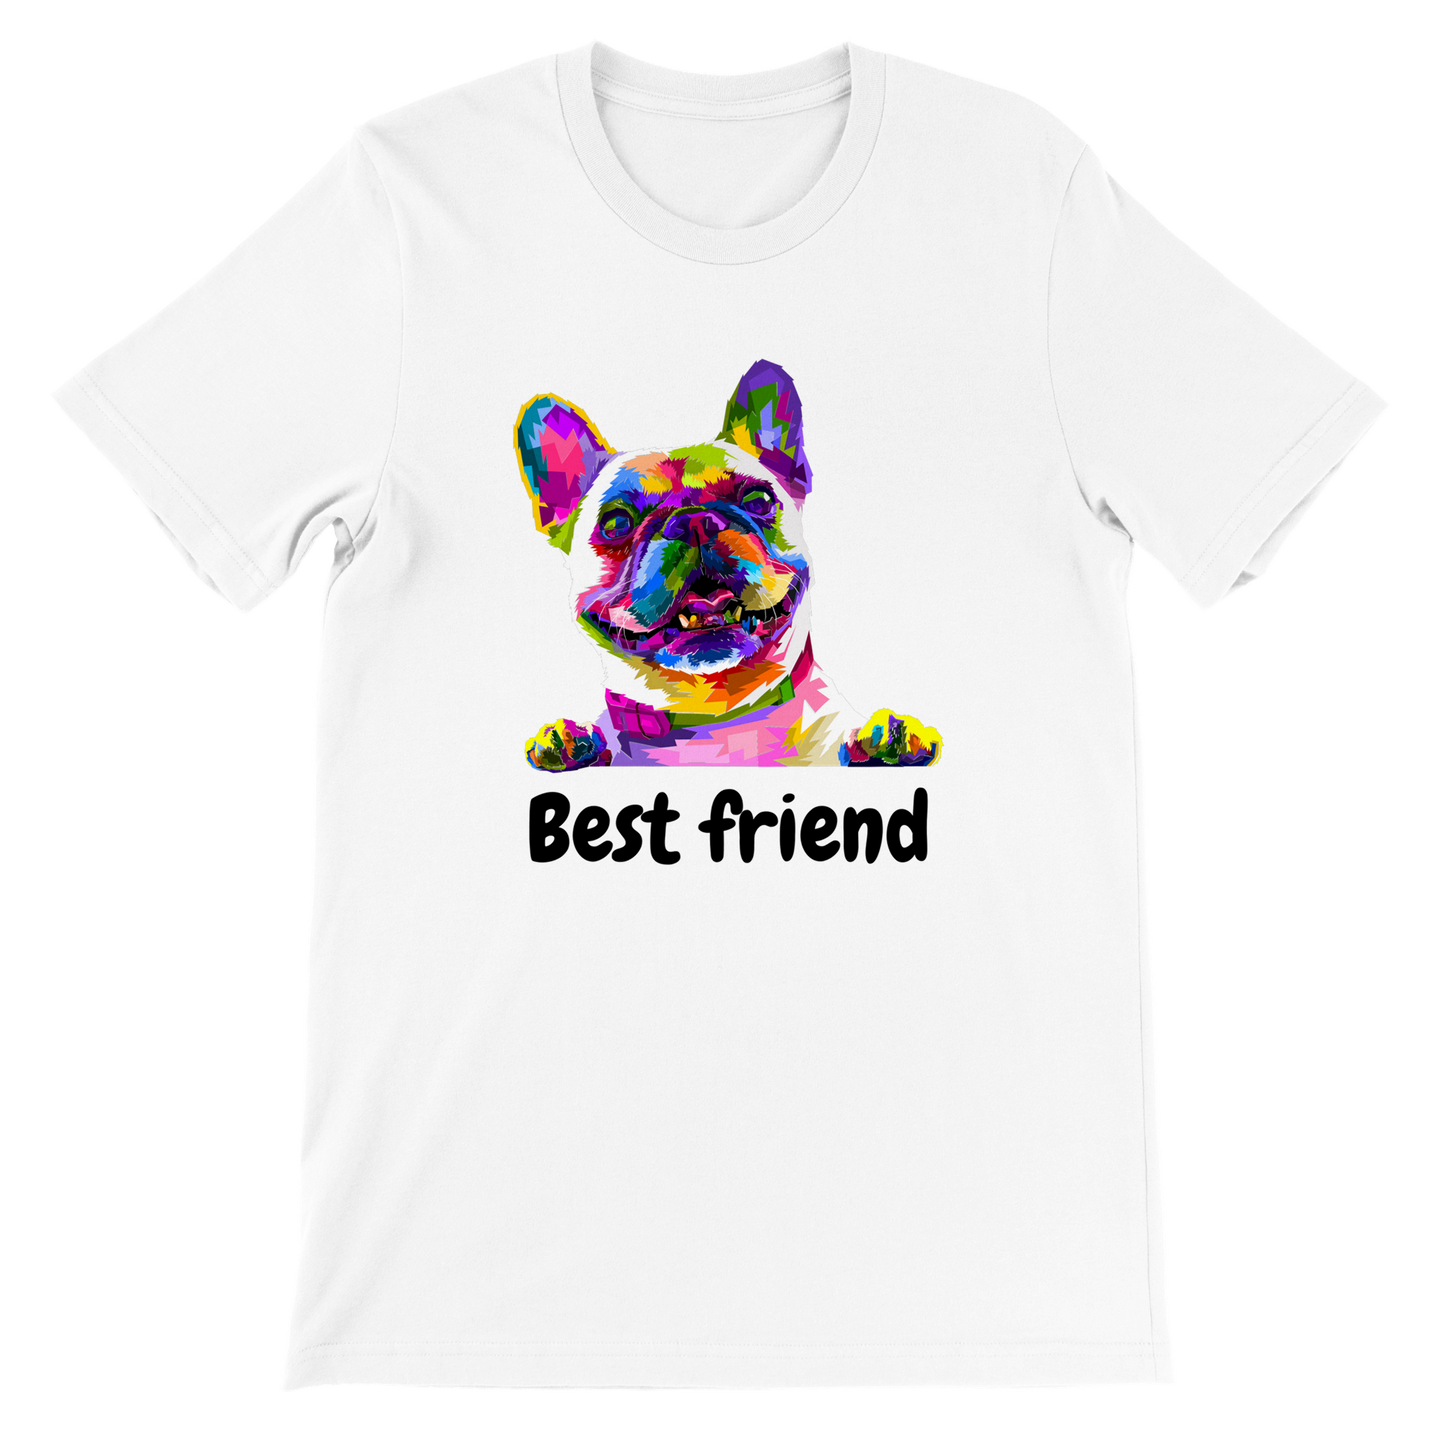 Best friend Premium Unisex Crewneck T-shirt